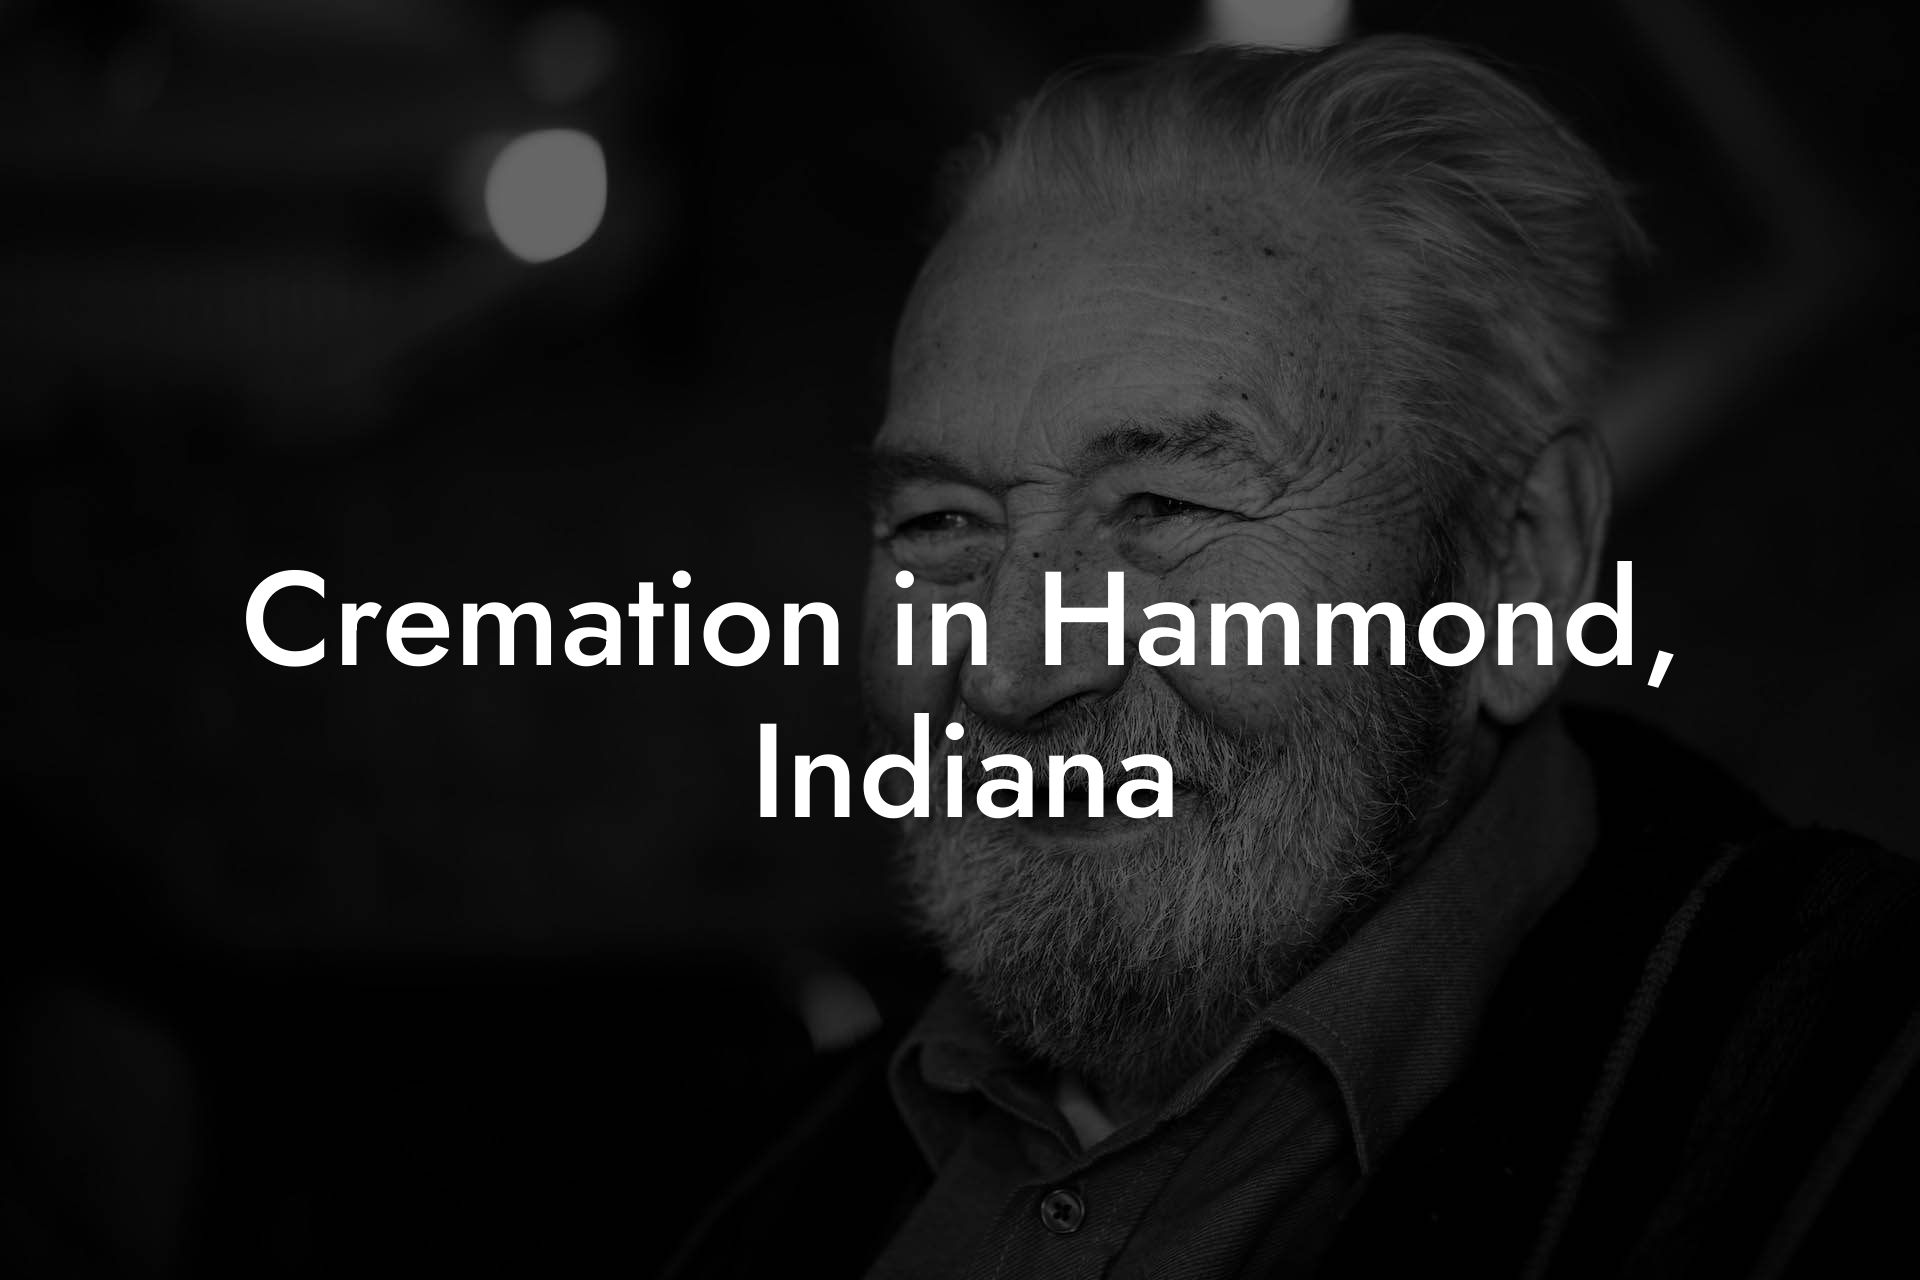 Cremation in Hammond, Indiana